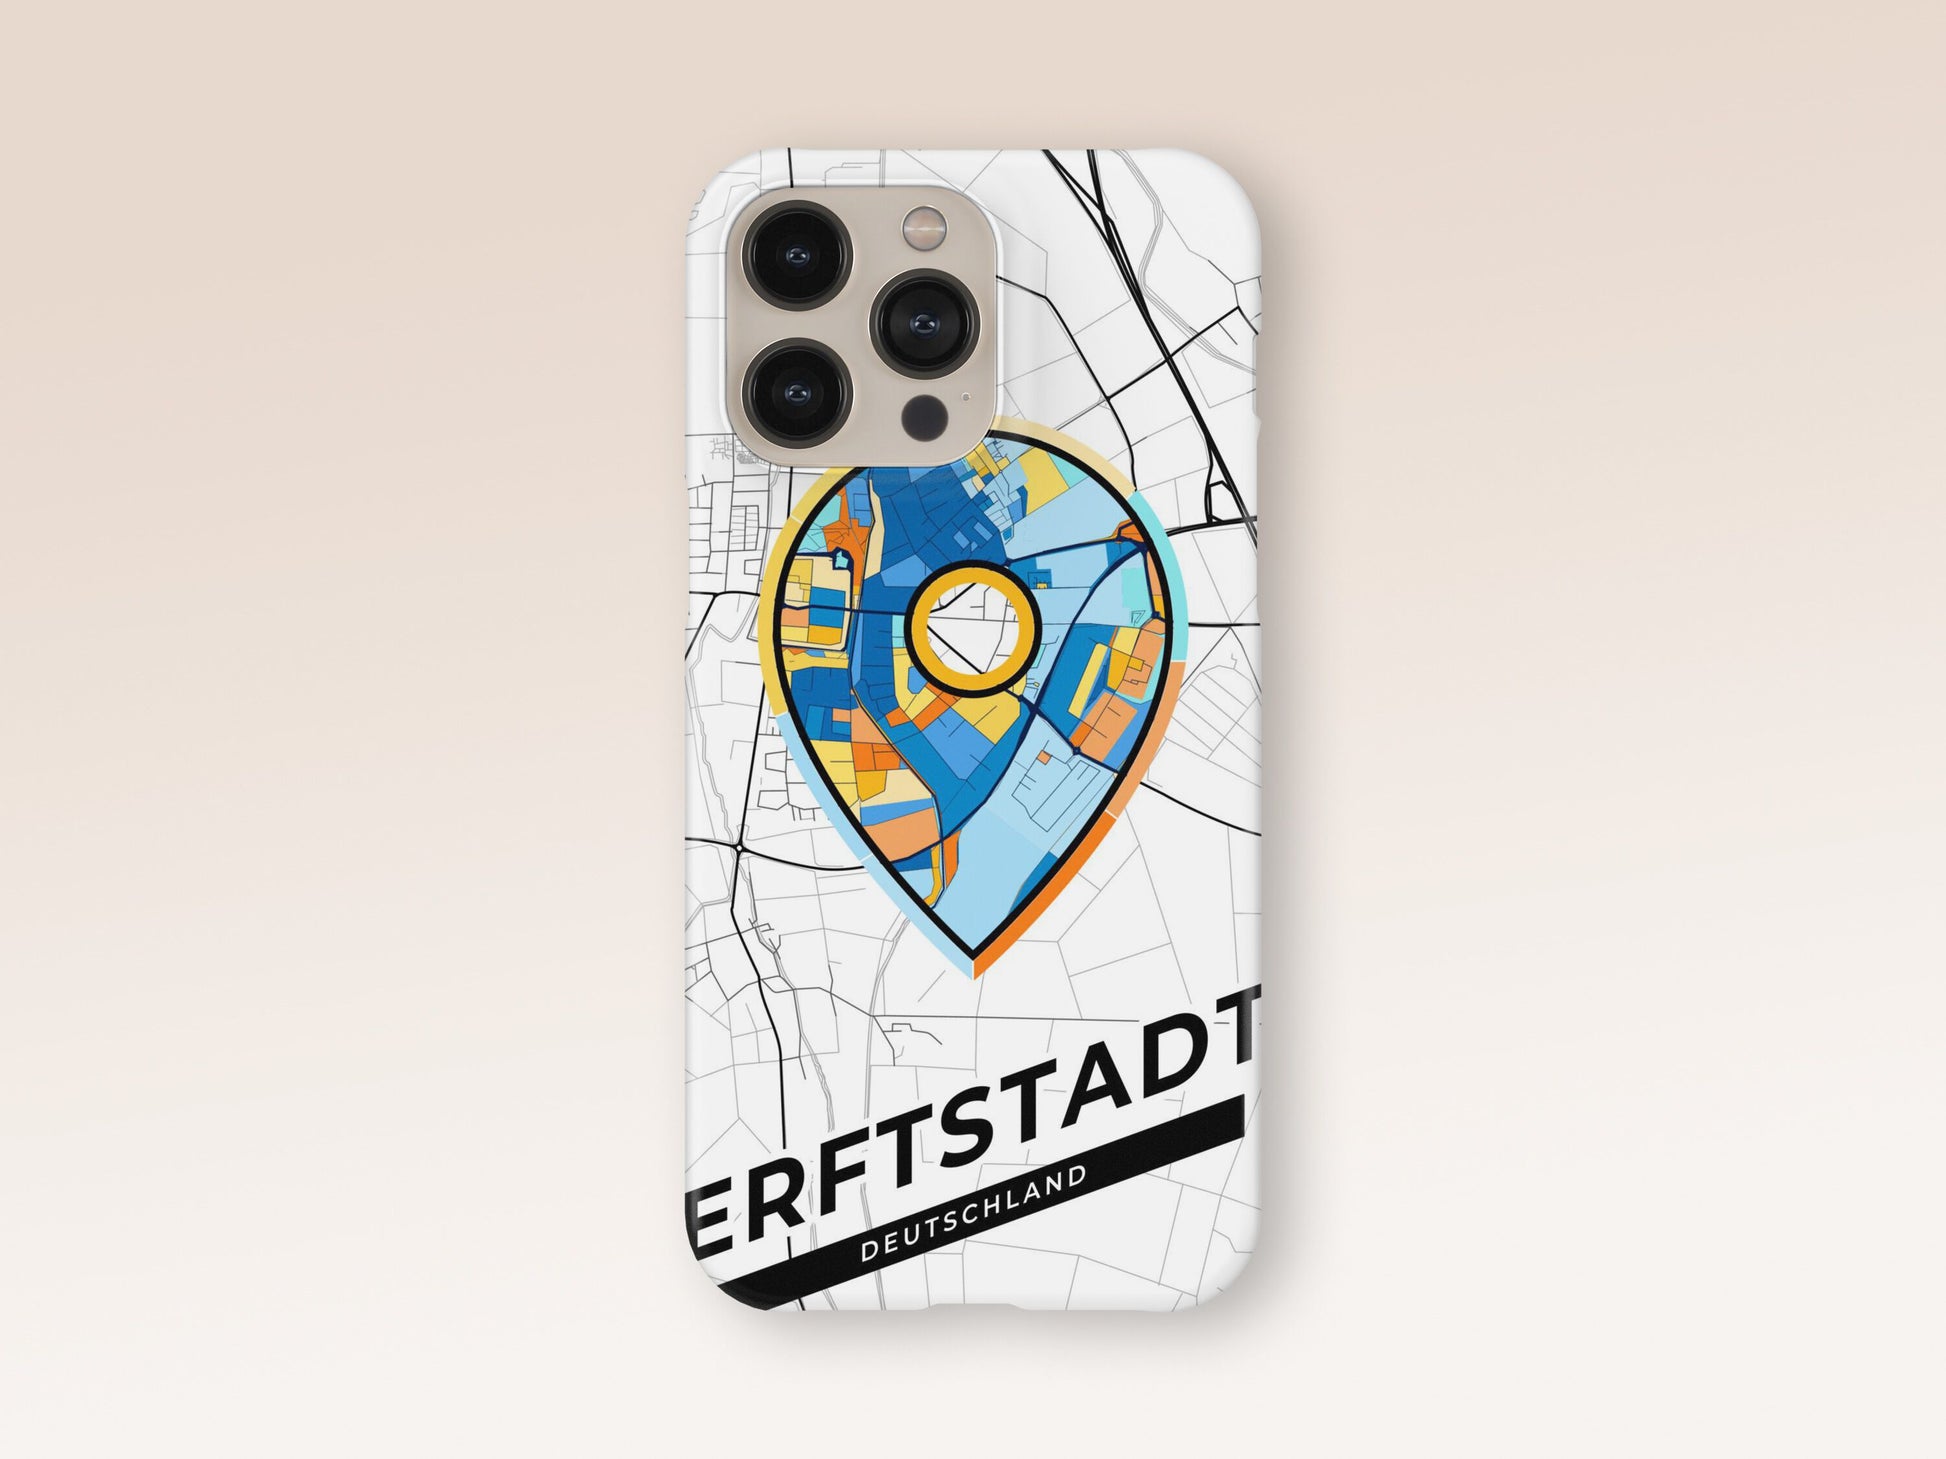 Erftstadt Deutschland slim phone case with colorful icon. Birthday, wedding or housewarming gift. Couple match cases. 1